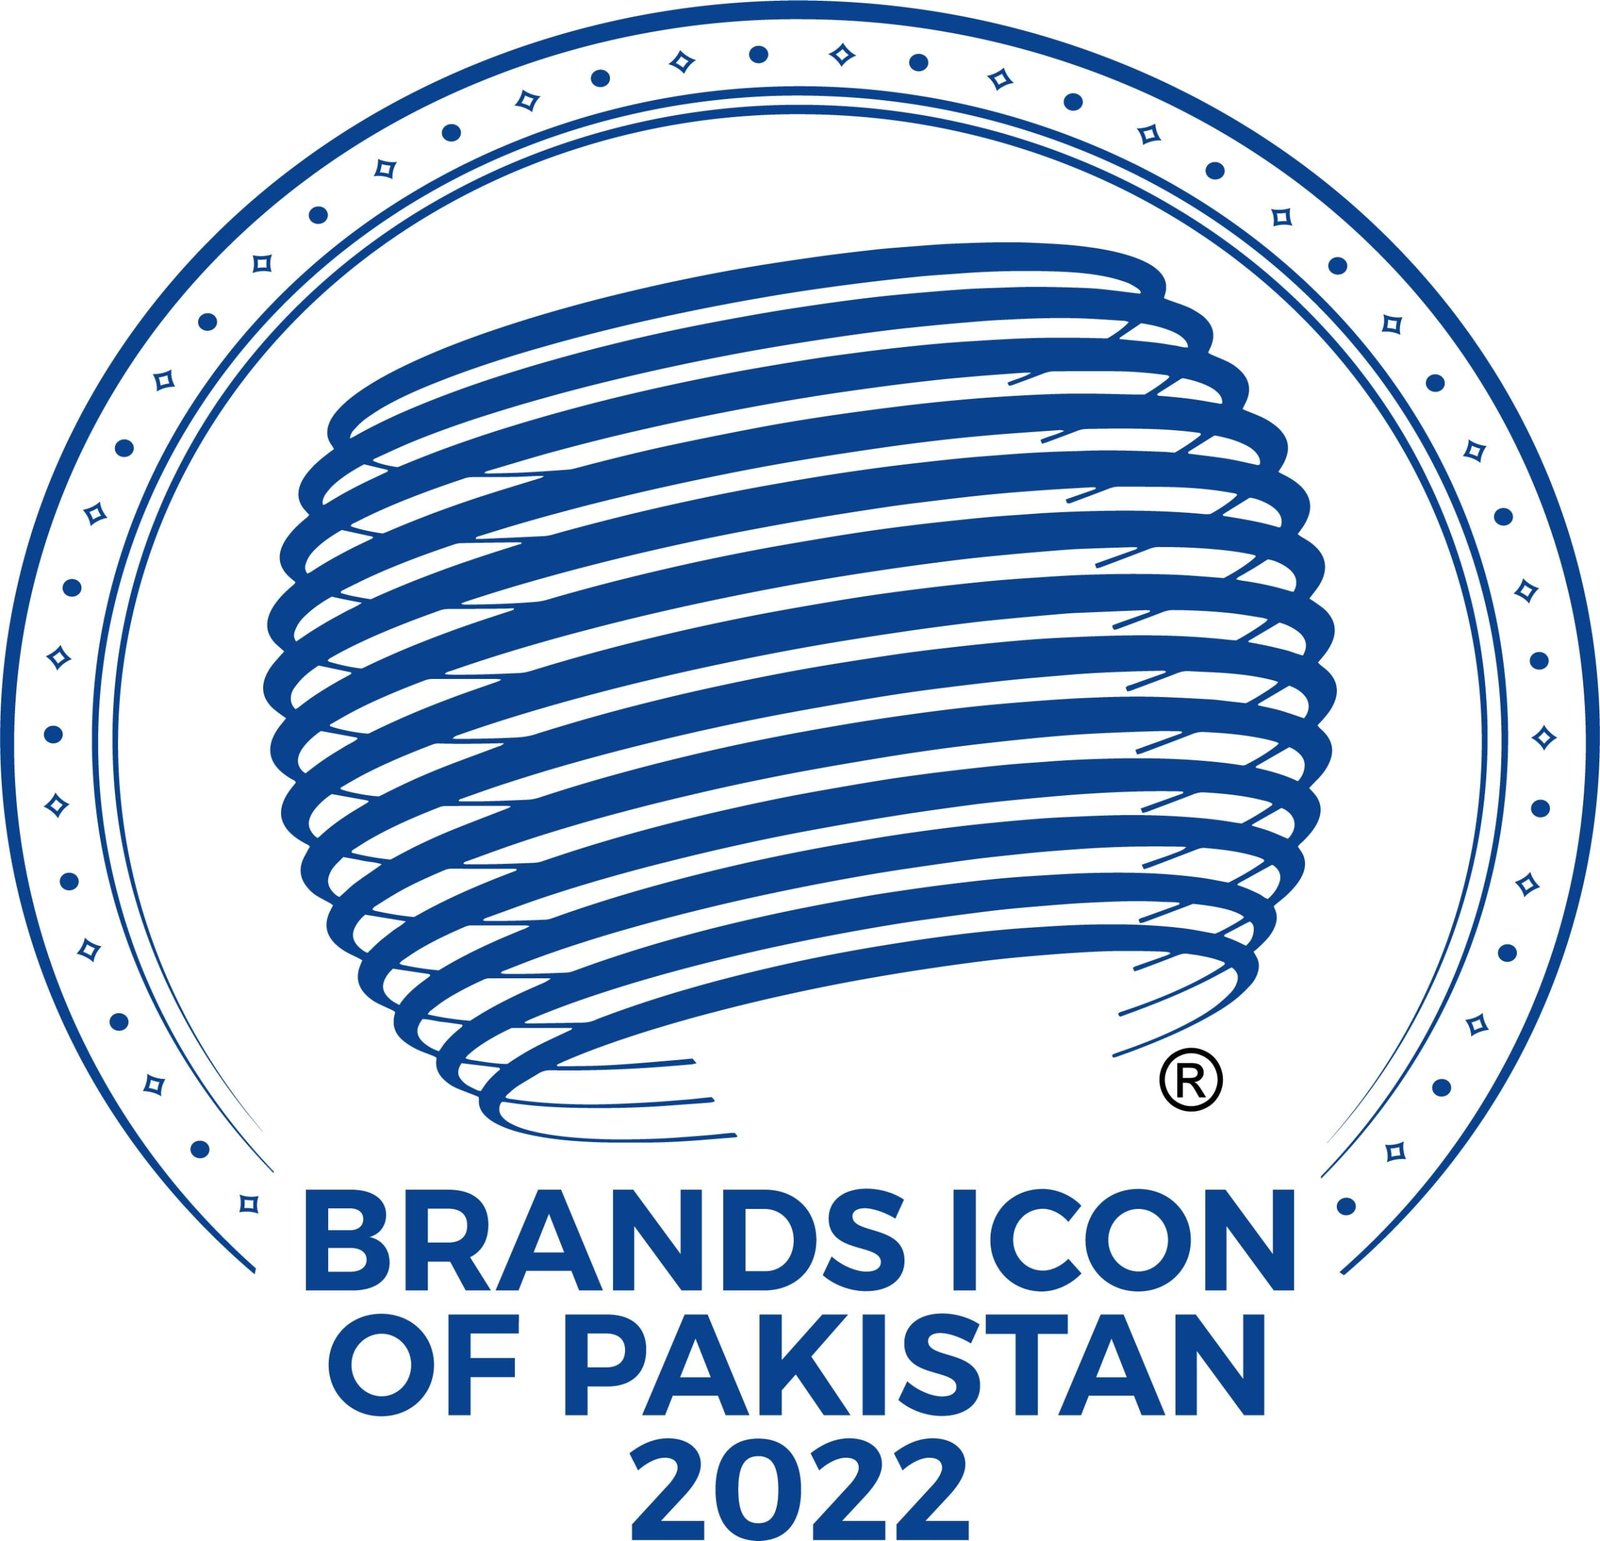 Brands-Icon-of-Pakistan-2022-logo-scaled.jpg